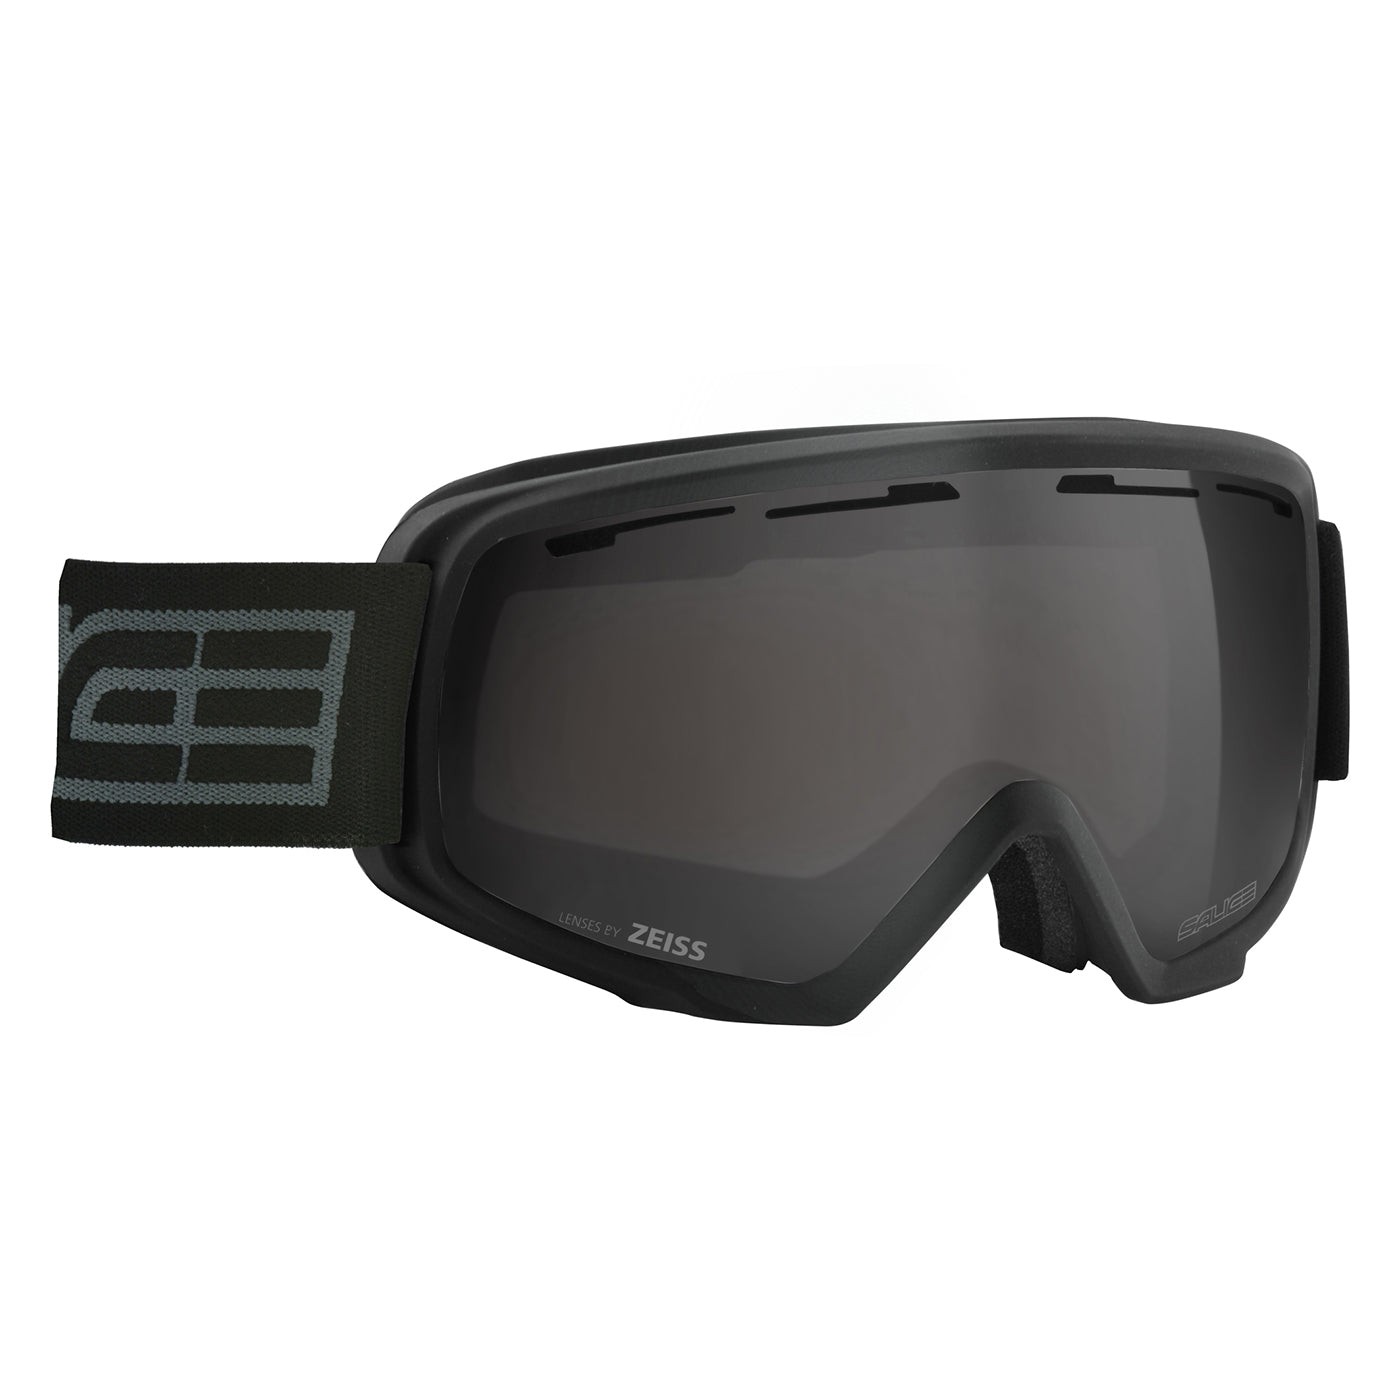 Salice Pro Black on Black Ski Goggles